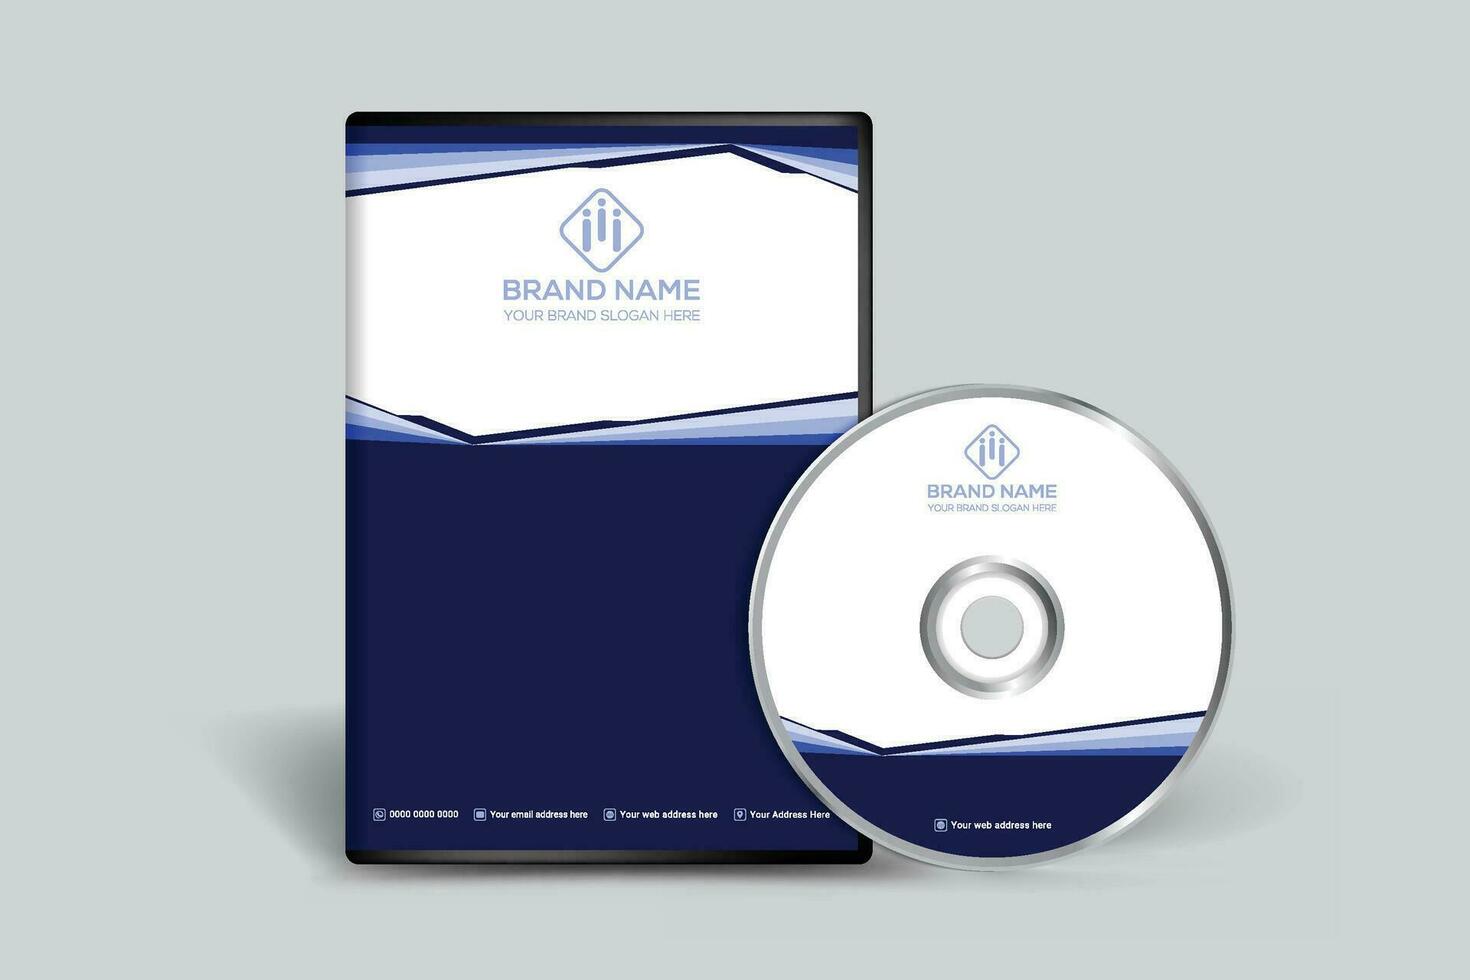 Blau Farbe DVD Startseite Design vektor